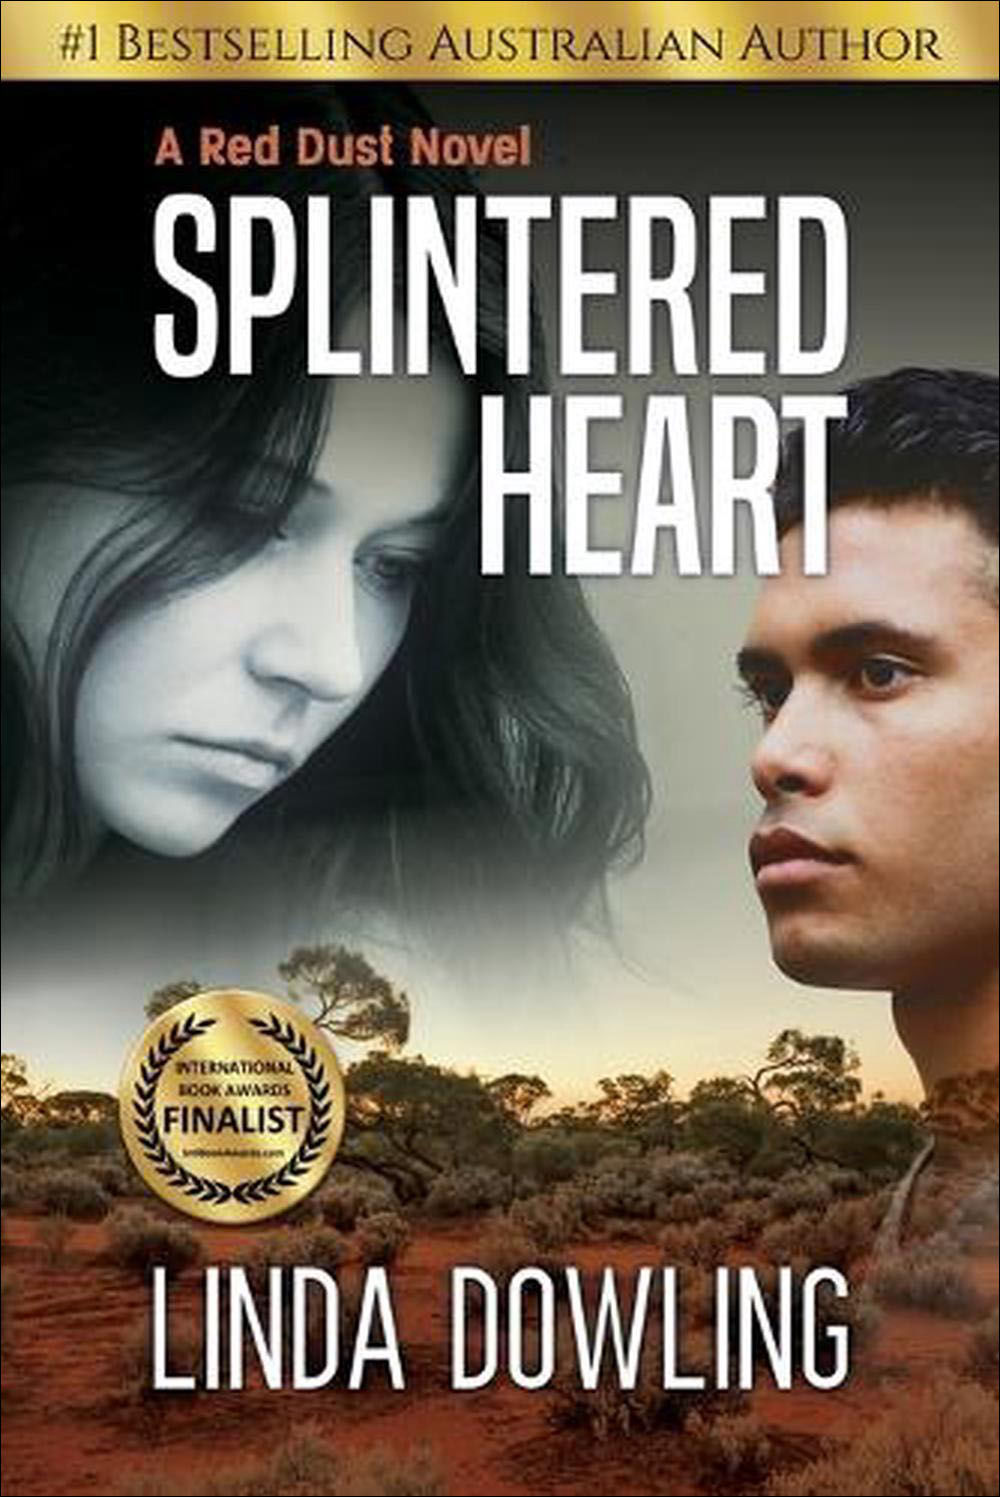 Linda Dowling's novel 'Splintered Heart'